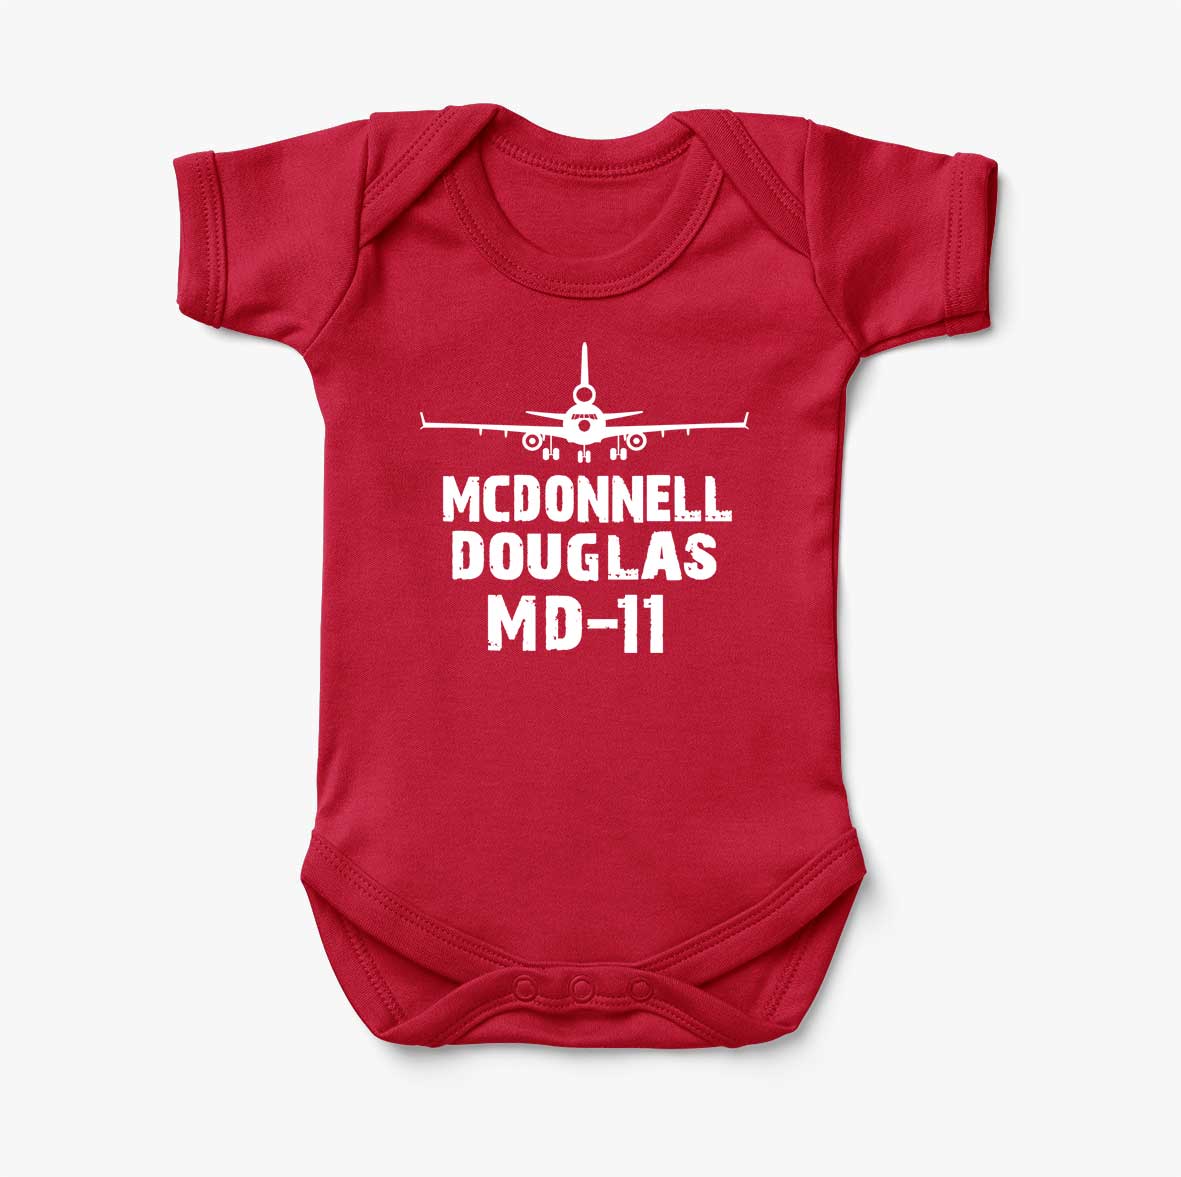 McDonnell Douglas MD-11 & Plane Designed Baby Bodysuits